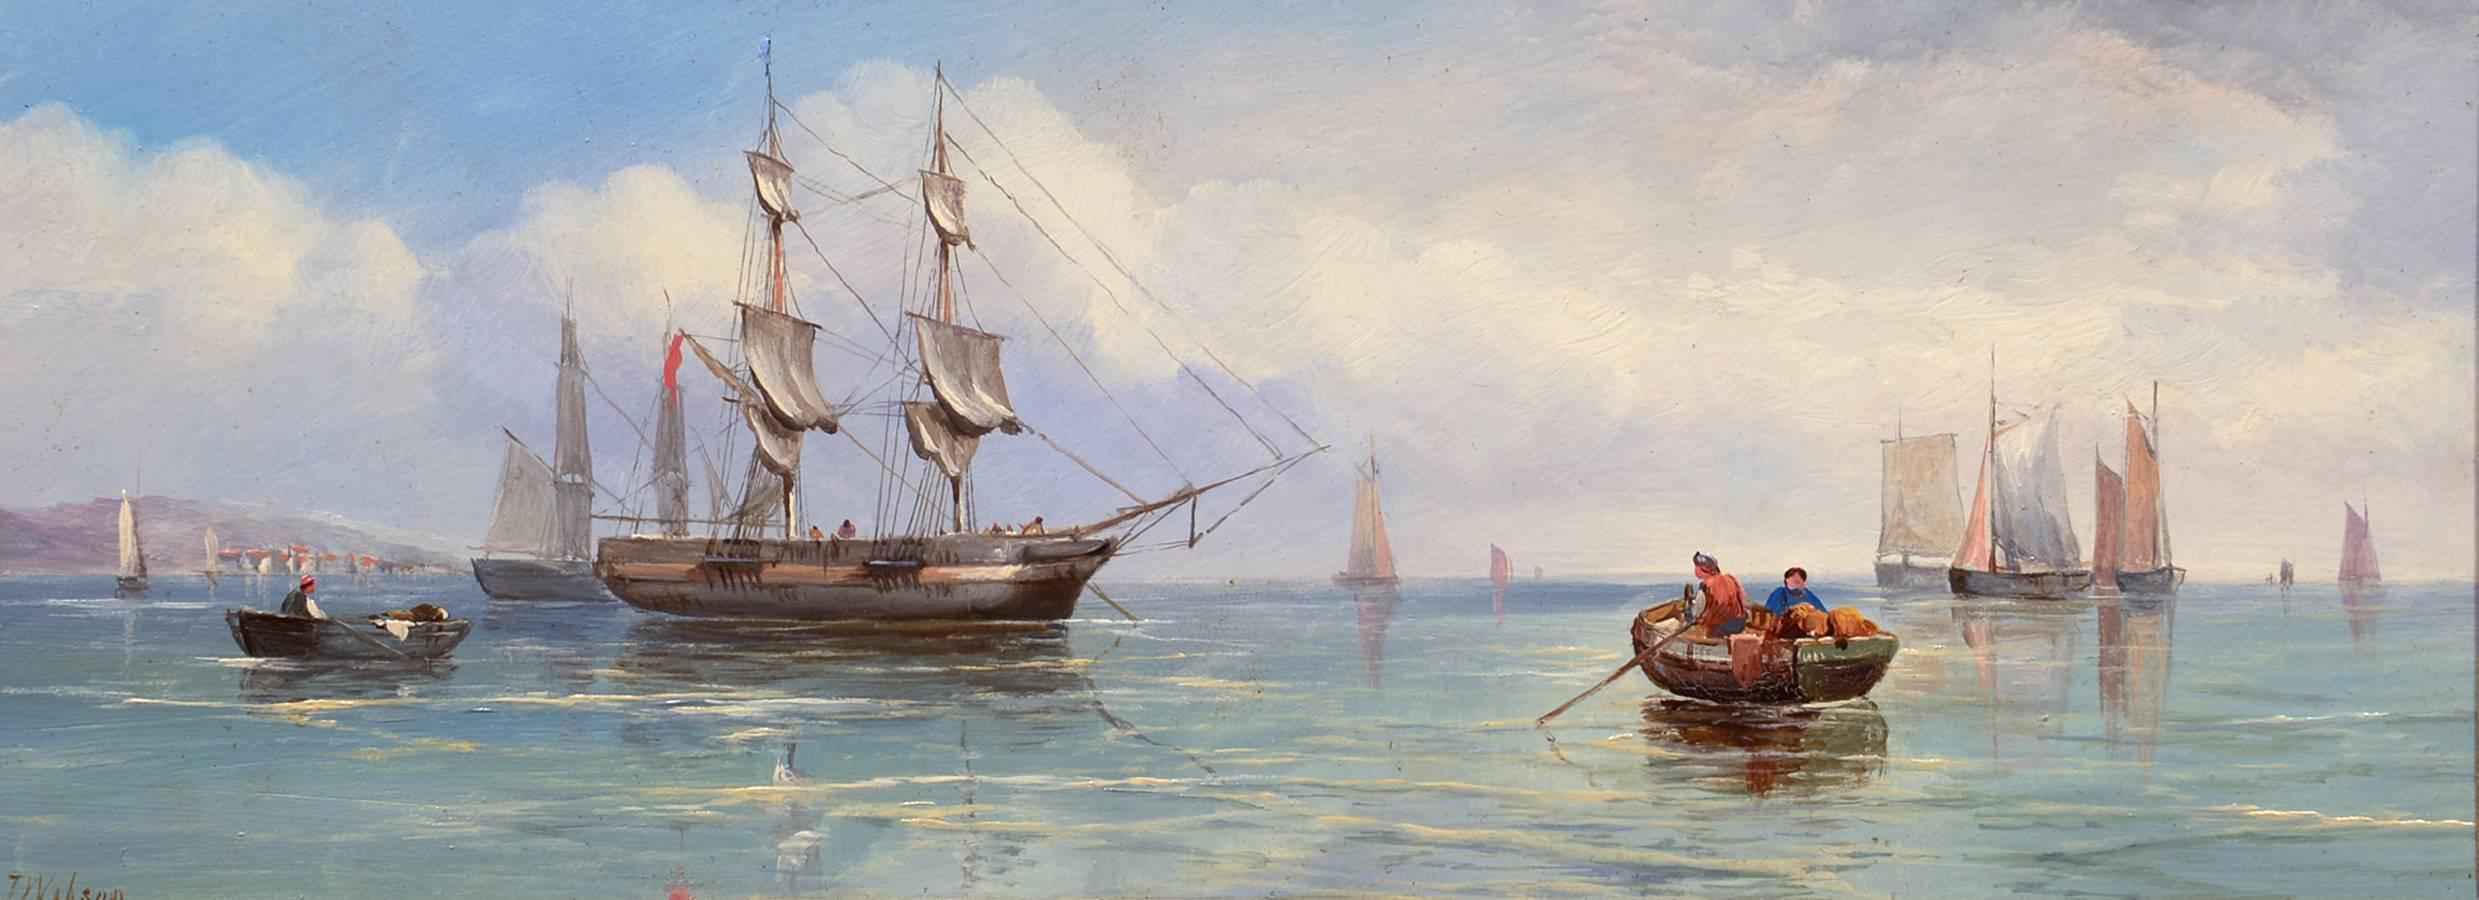 John James Wilson Landscape Painting - Calm Morning at Sea